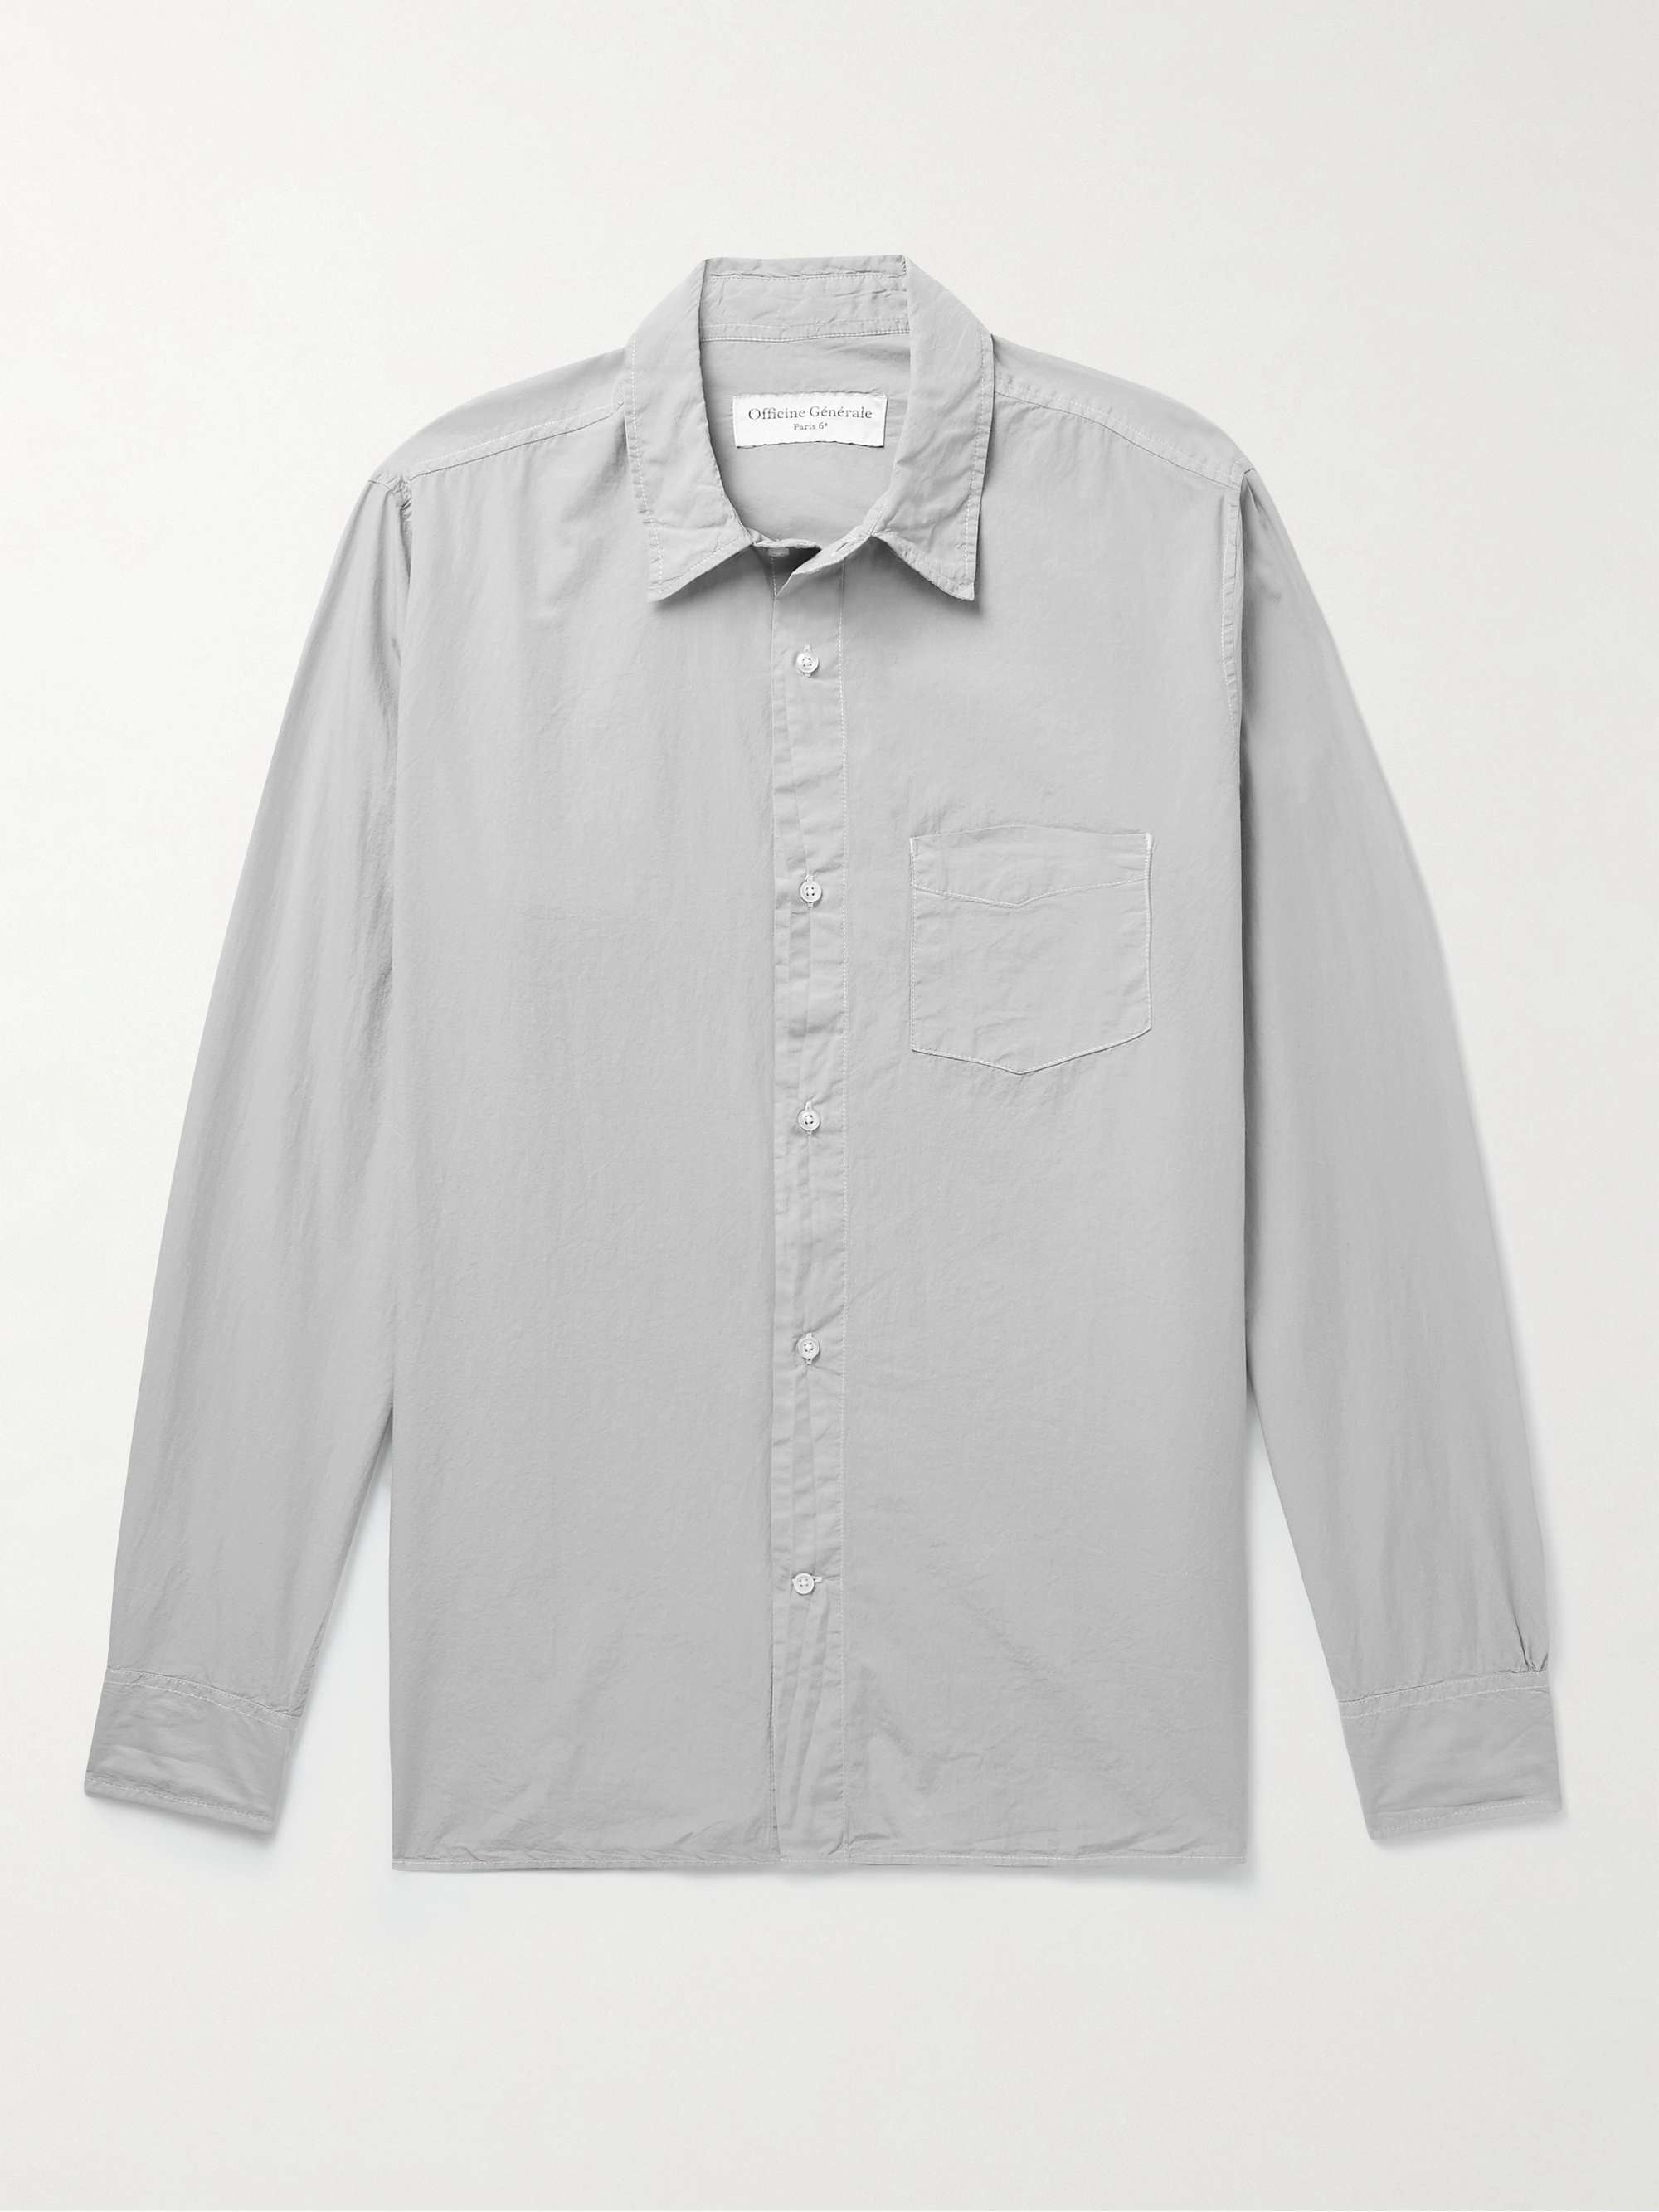 OFFICINE GÉNÉRALE Emory Garment-Dyed Cotton-Poplin Shirt